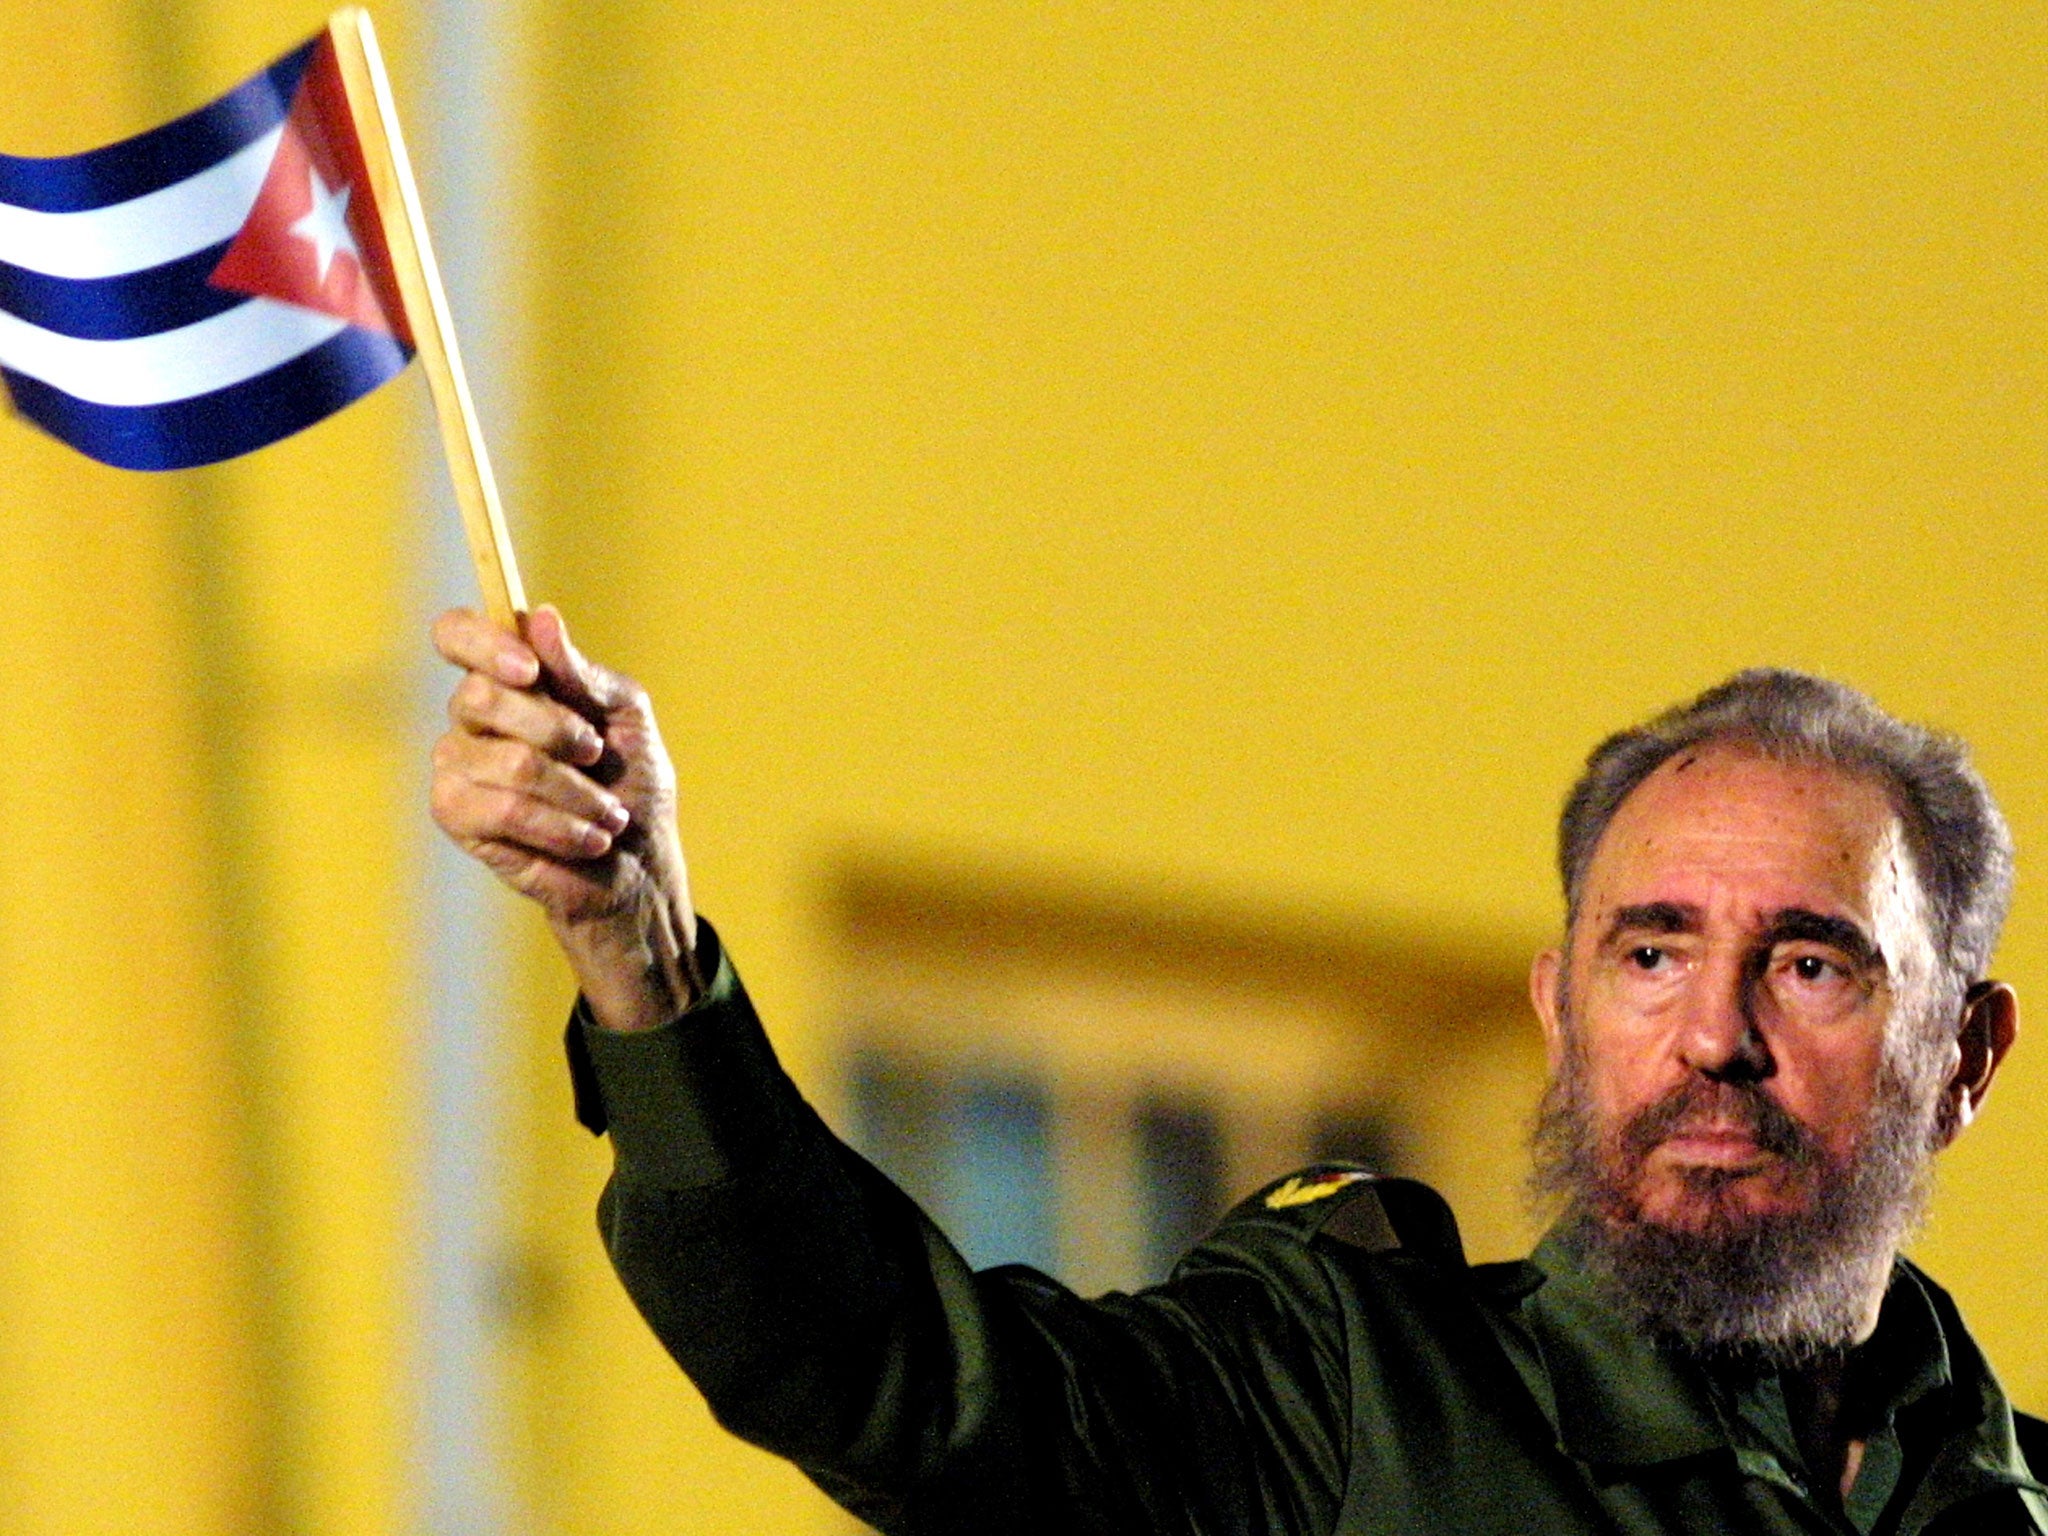 Fidel Castro waving the Cuban flag